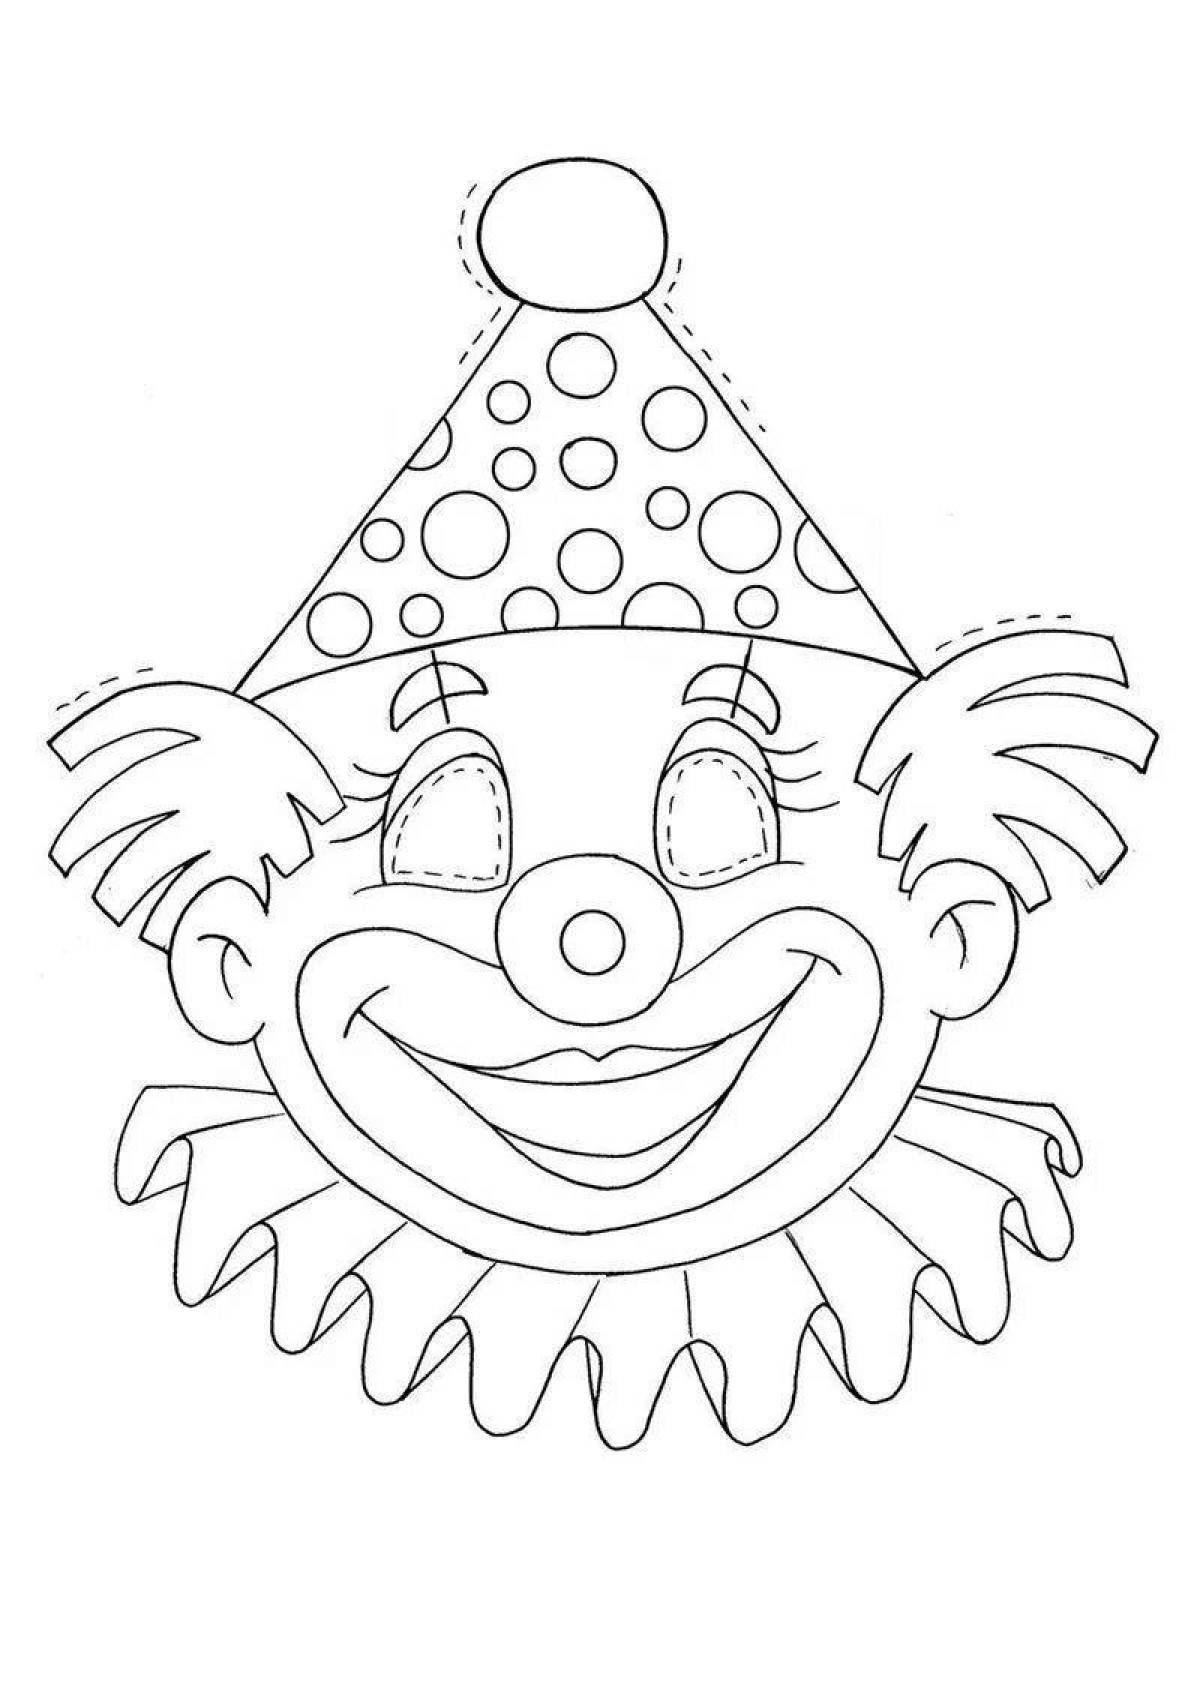 Рисование маска клоуна. Клоун раскраска. Клоун раскраска для детей. Маска клоун раскраска для детей. Маски клоуна для детей.